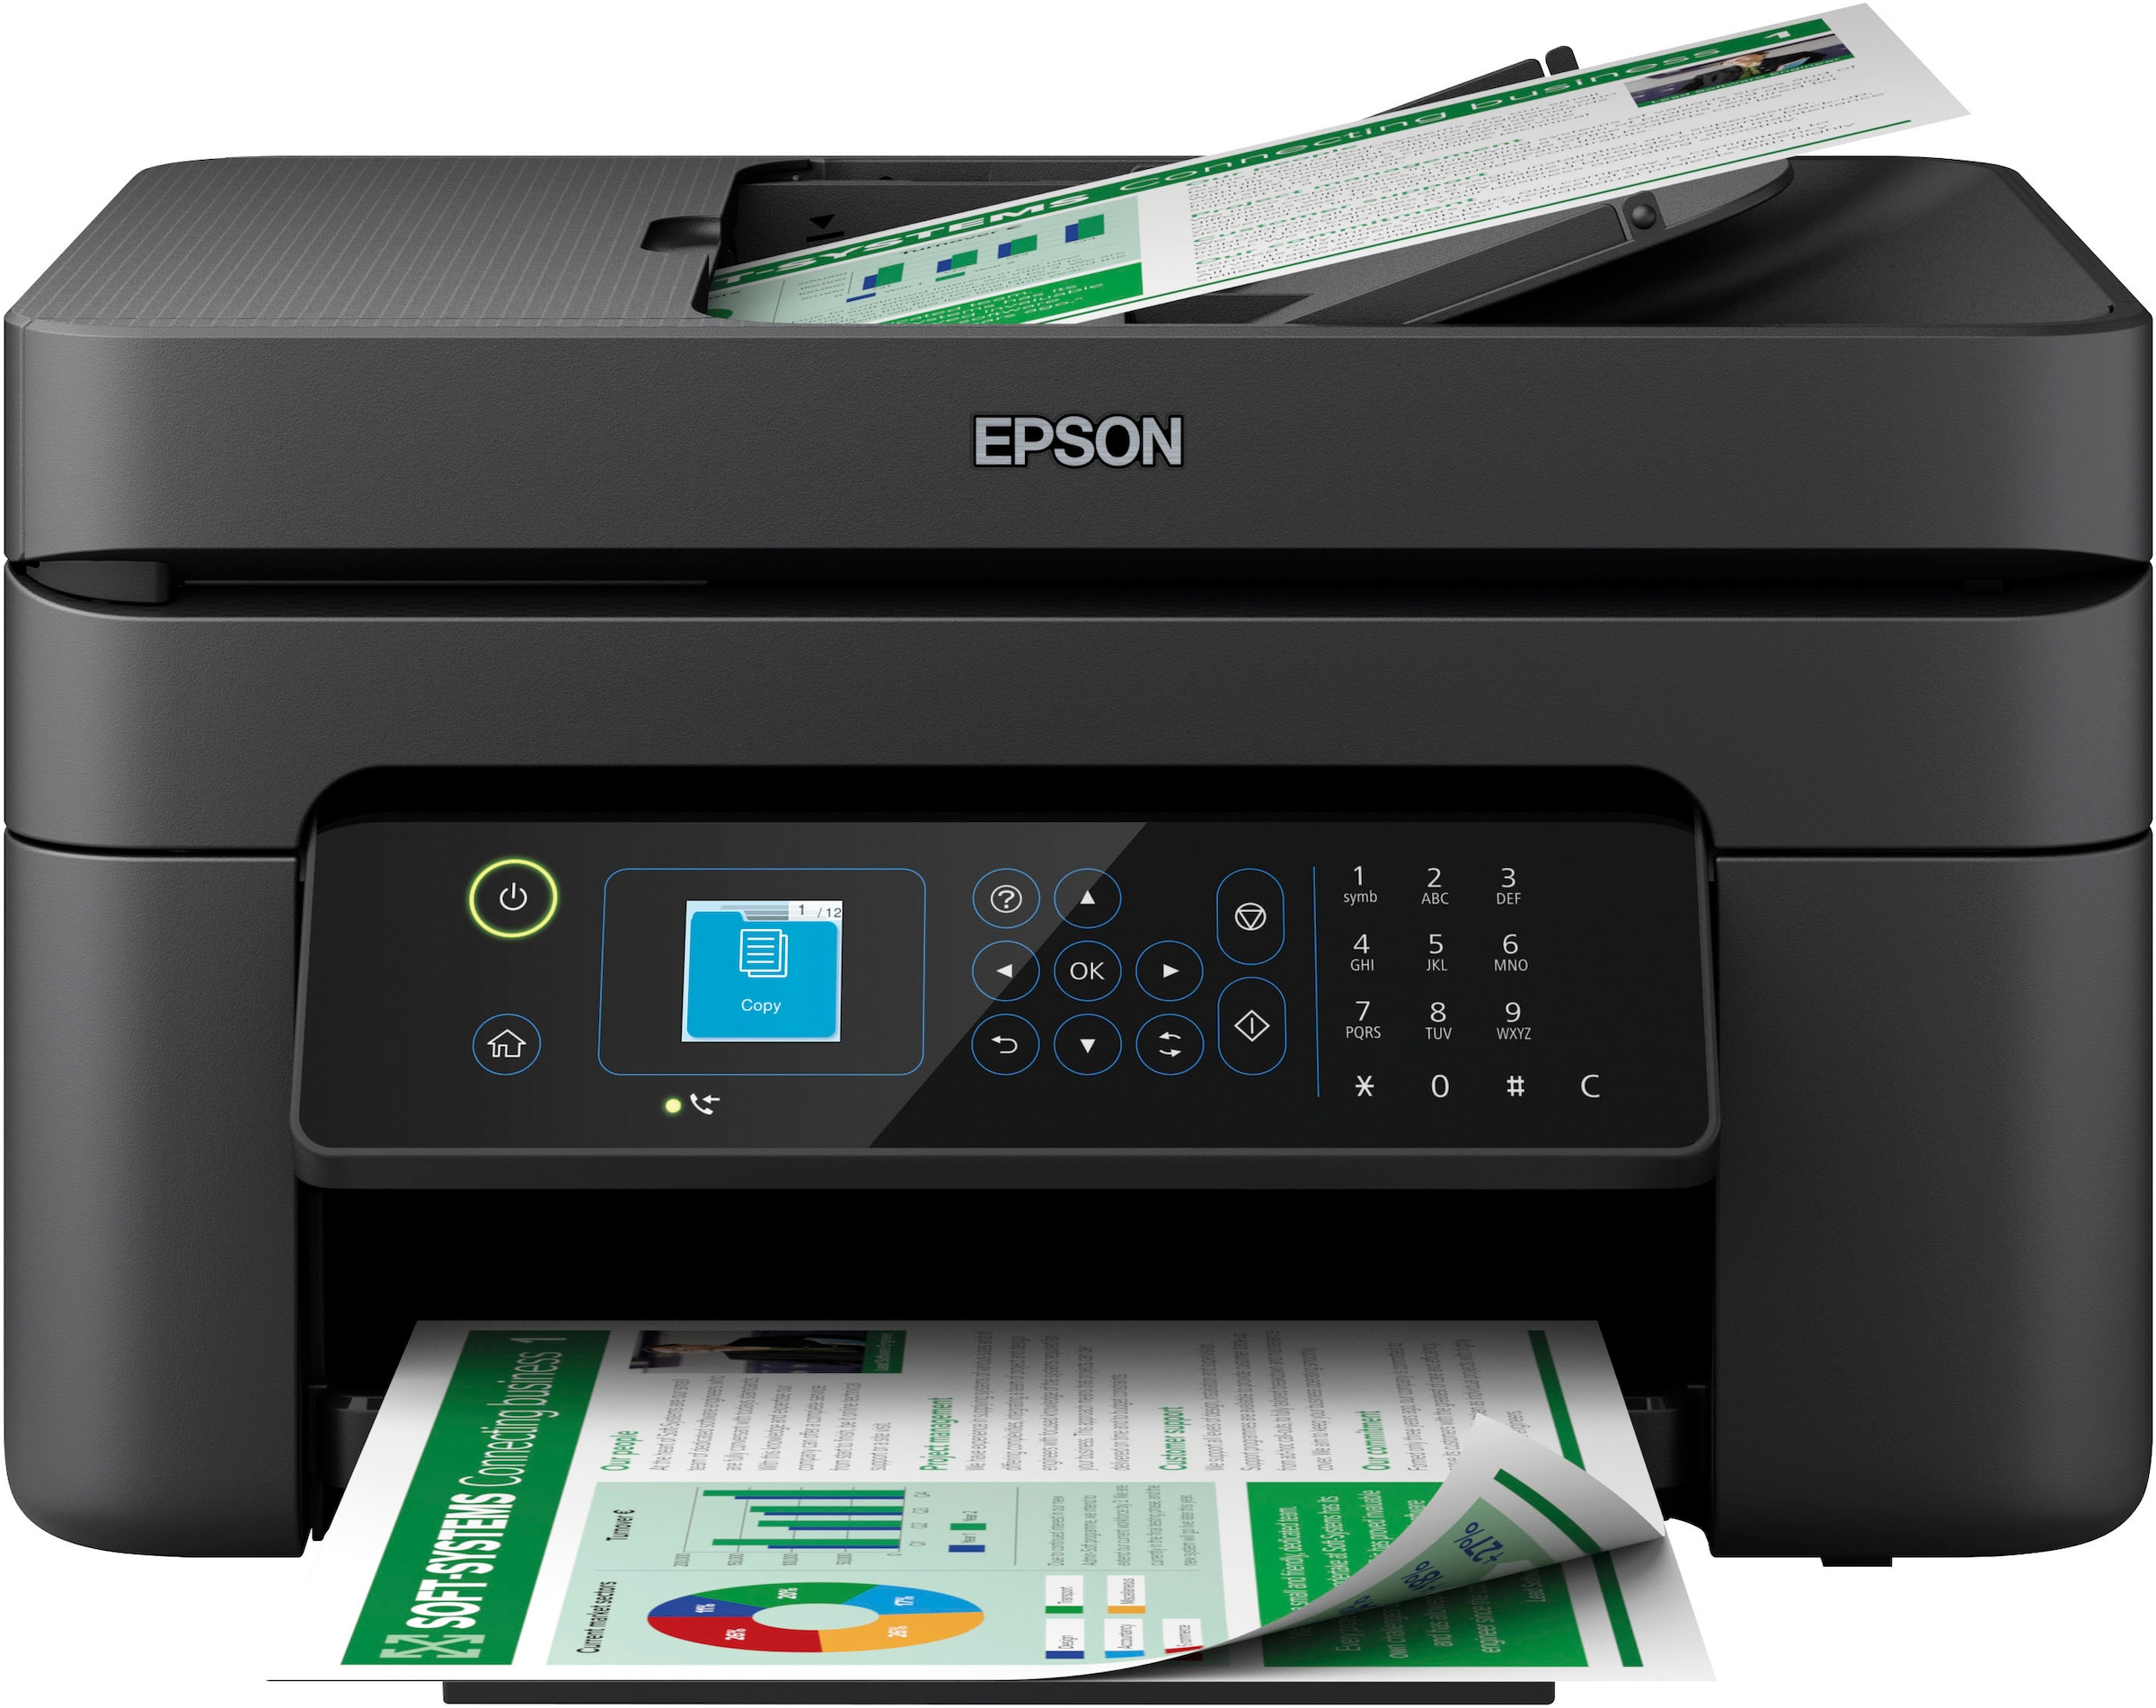 Epson Multifunktionsdrucker »WorkForce WF-2935DWF«